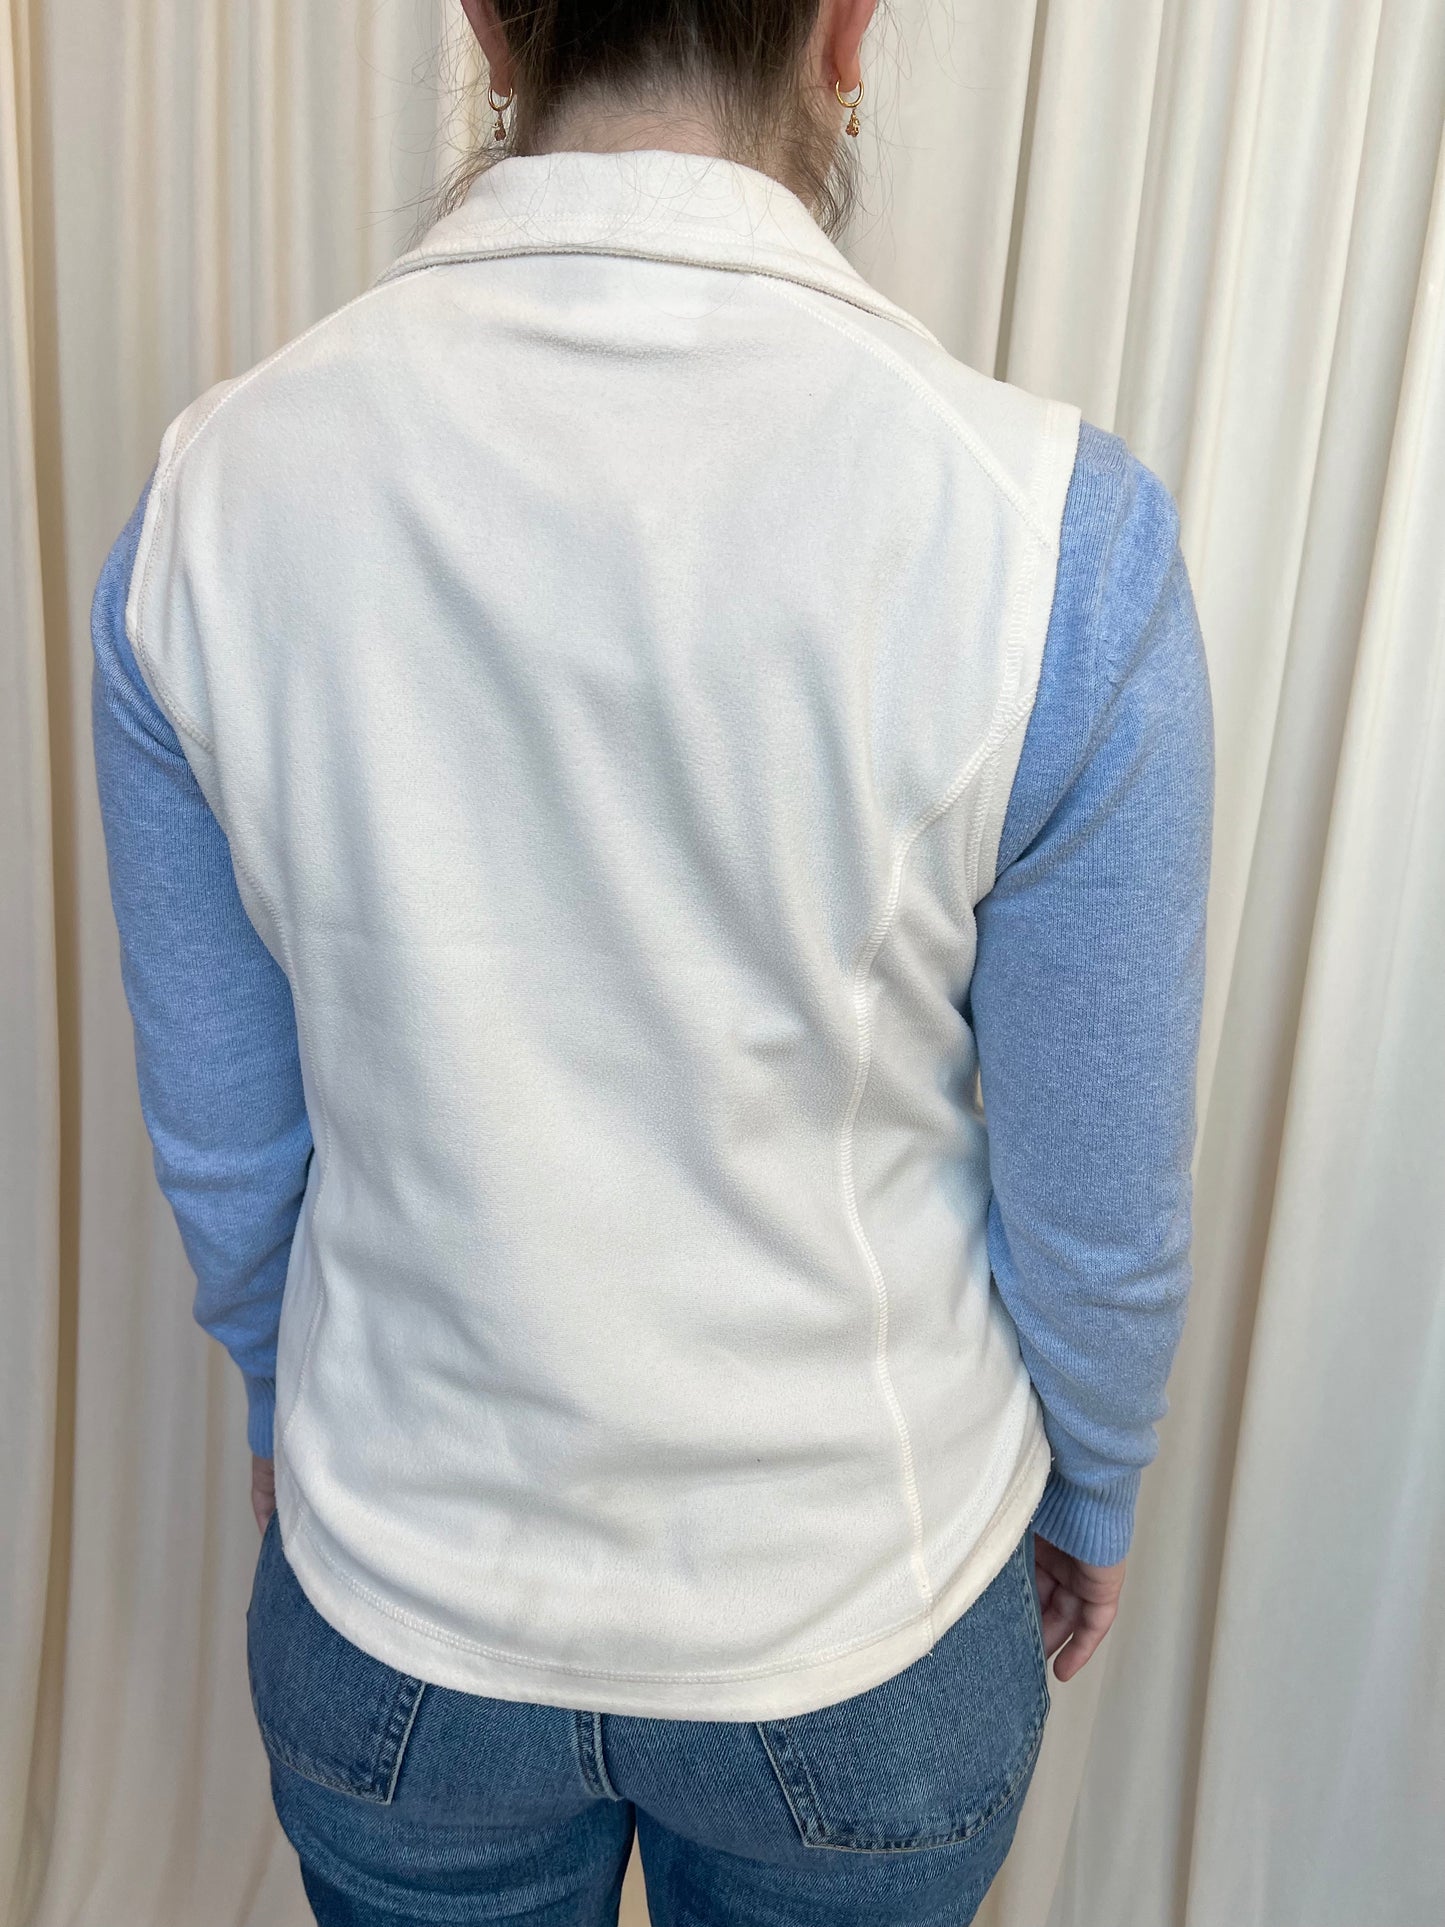 White Zip Up Fleece Vest - Small